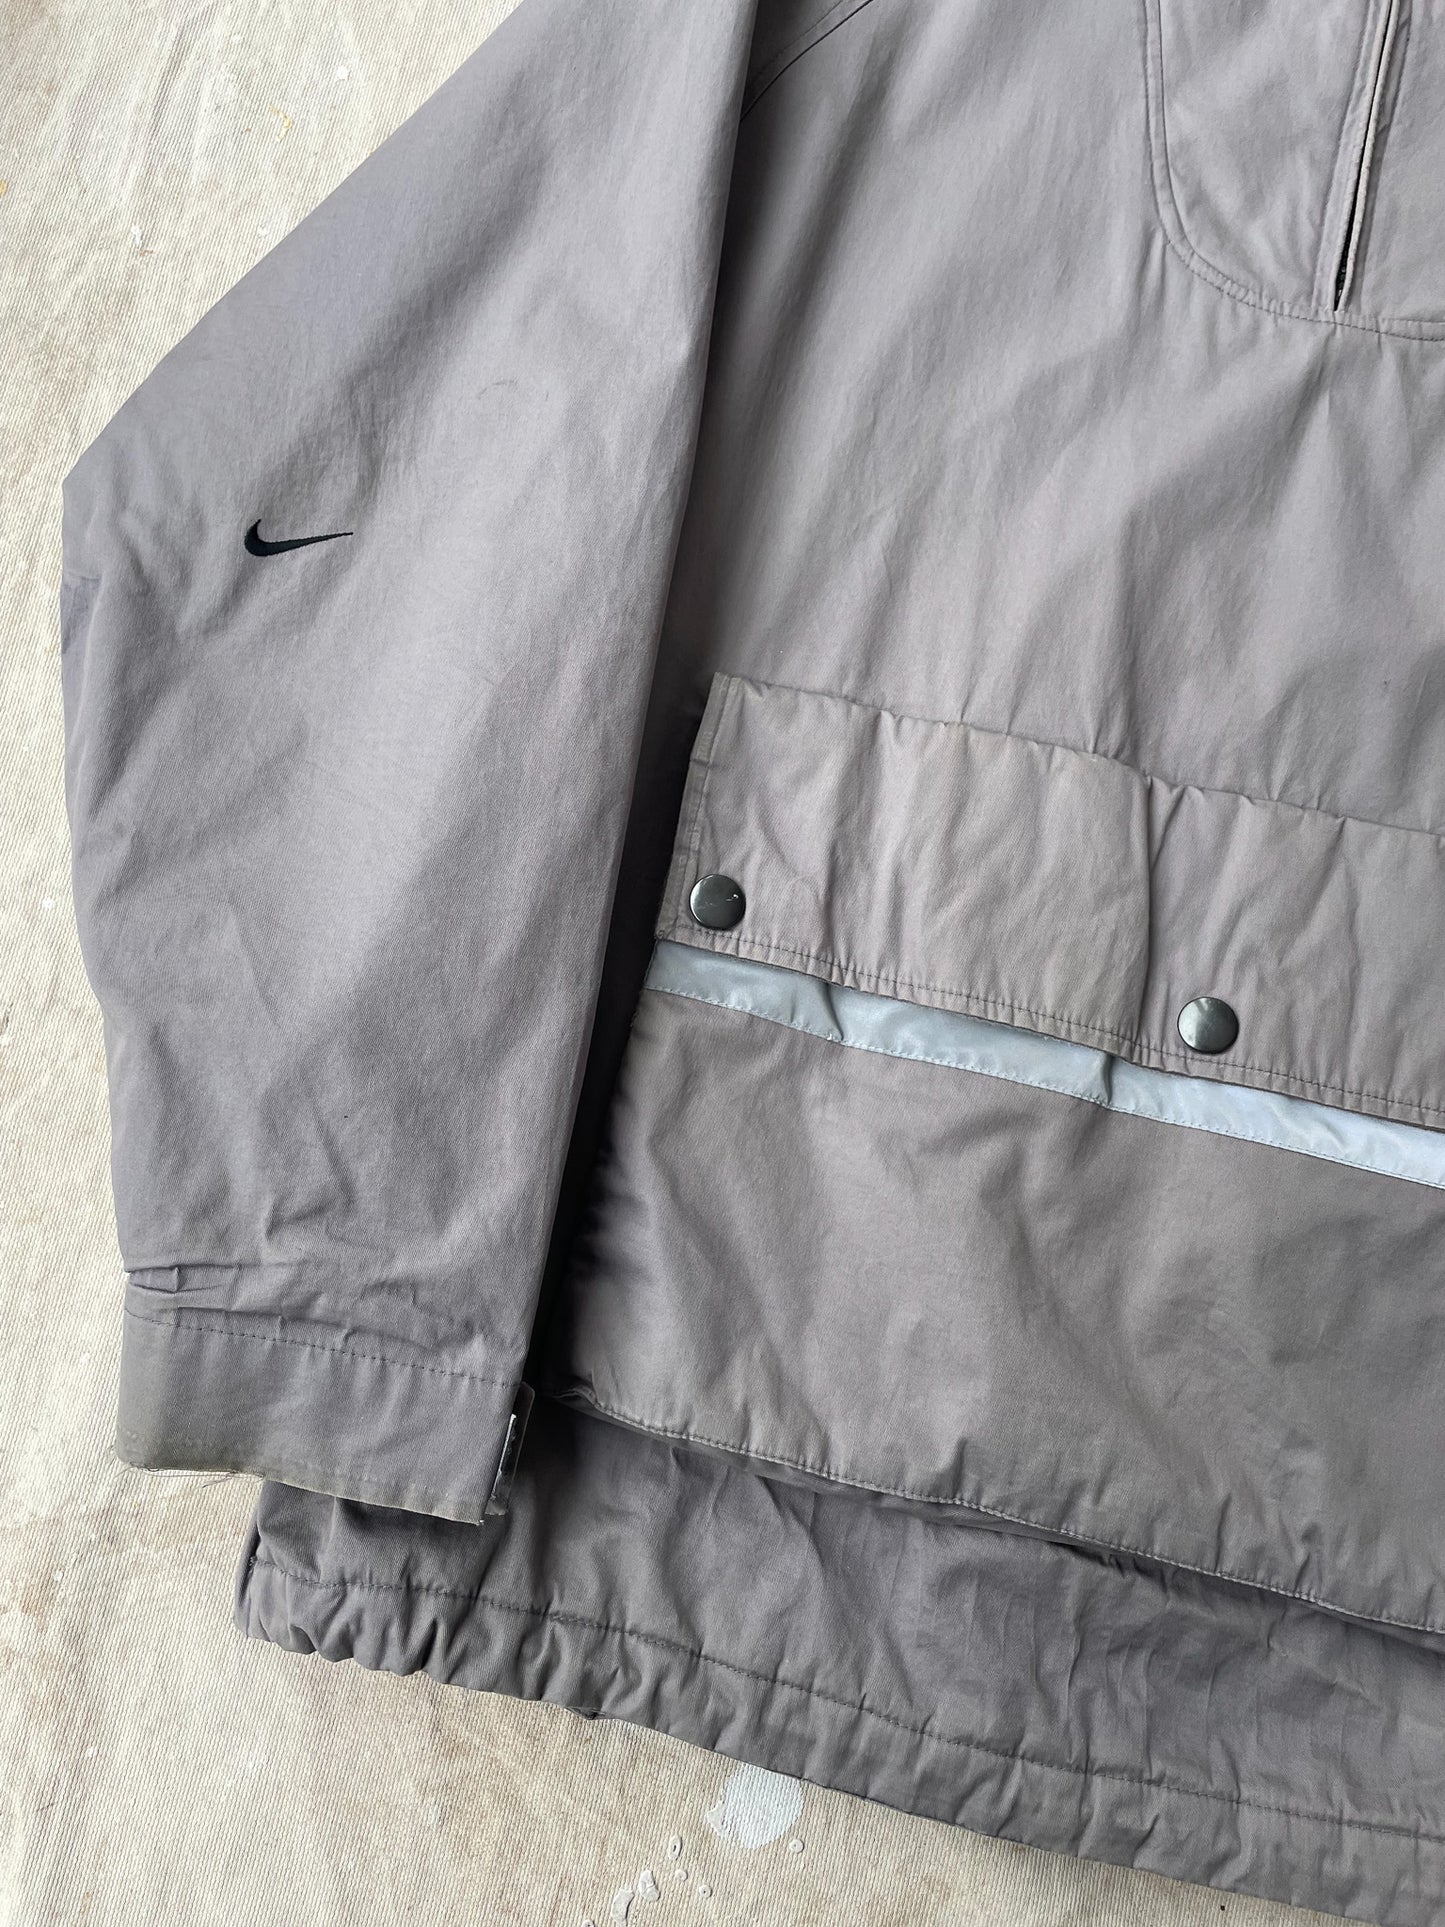 Nike Anorak Jacket—[M]